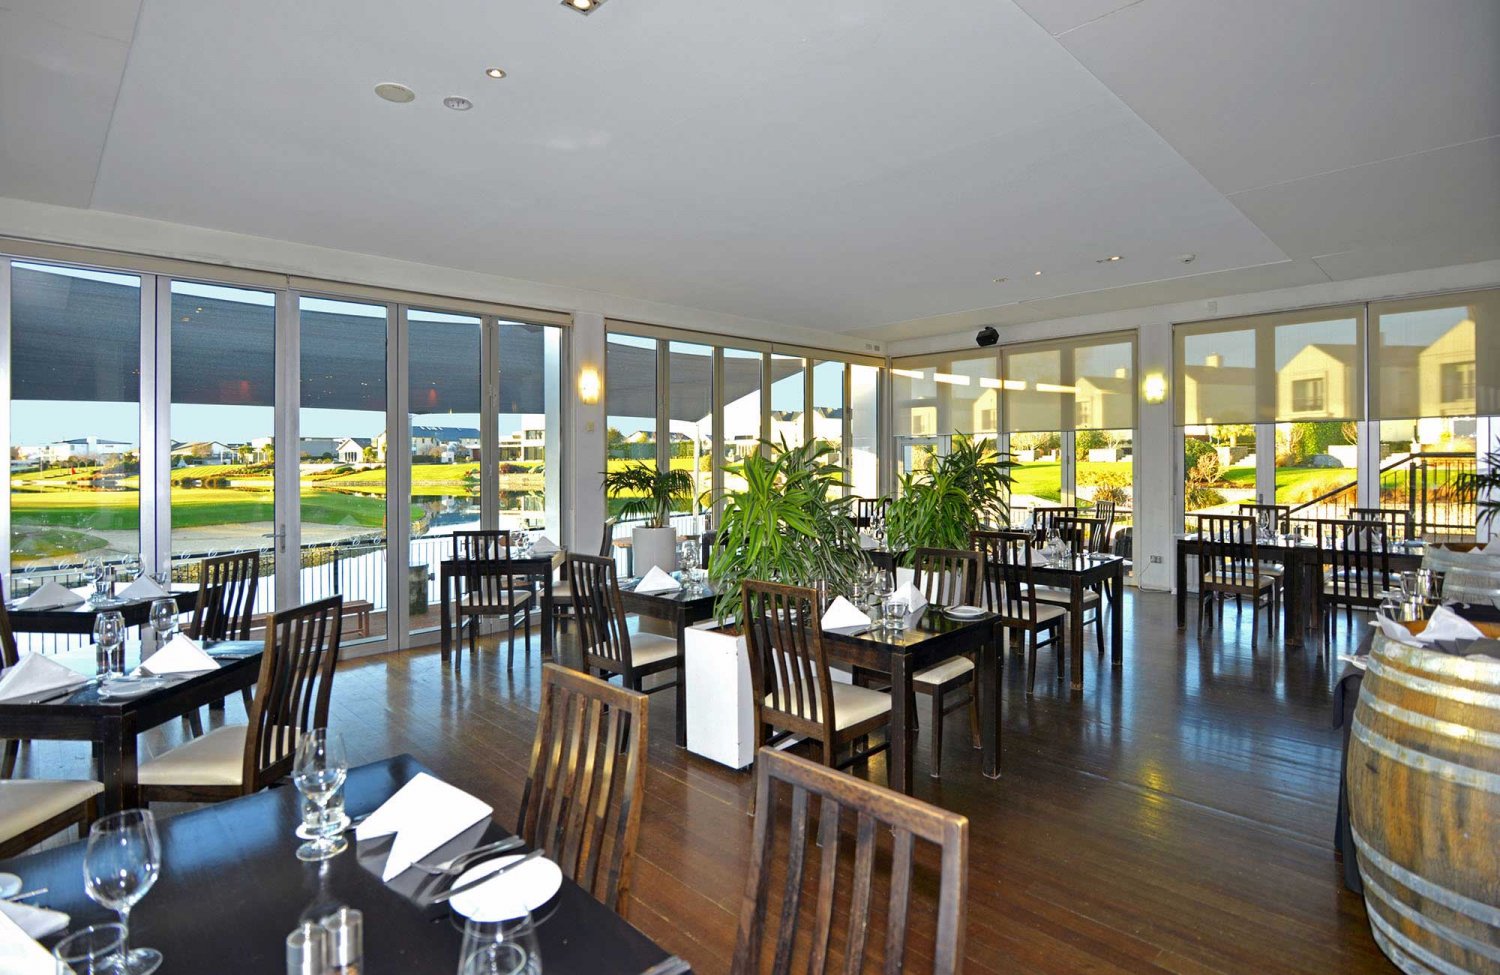 Christchurch Restaurants With A View